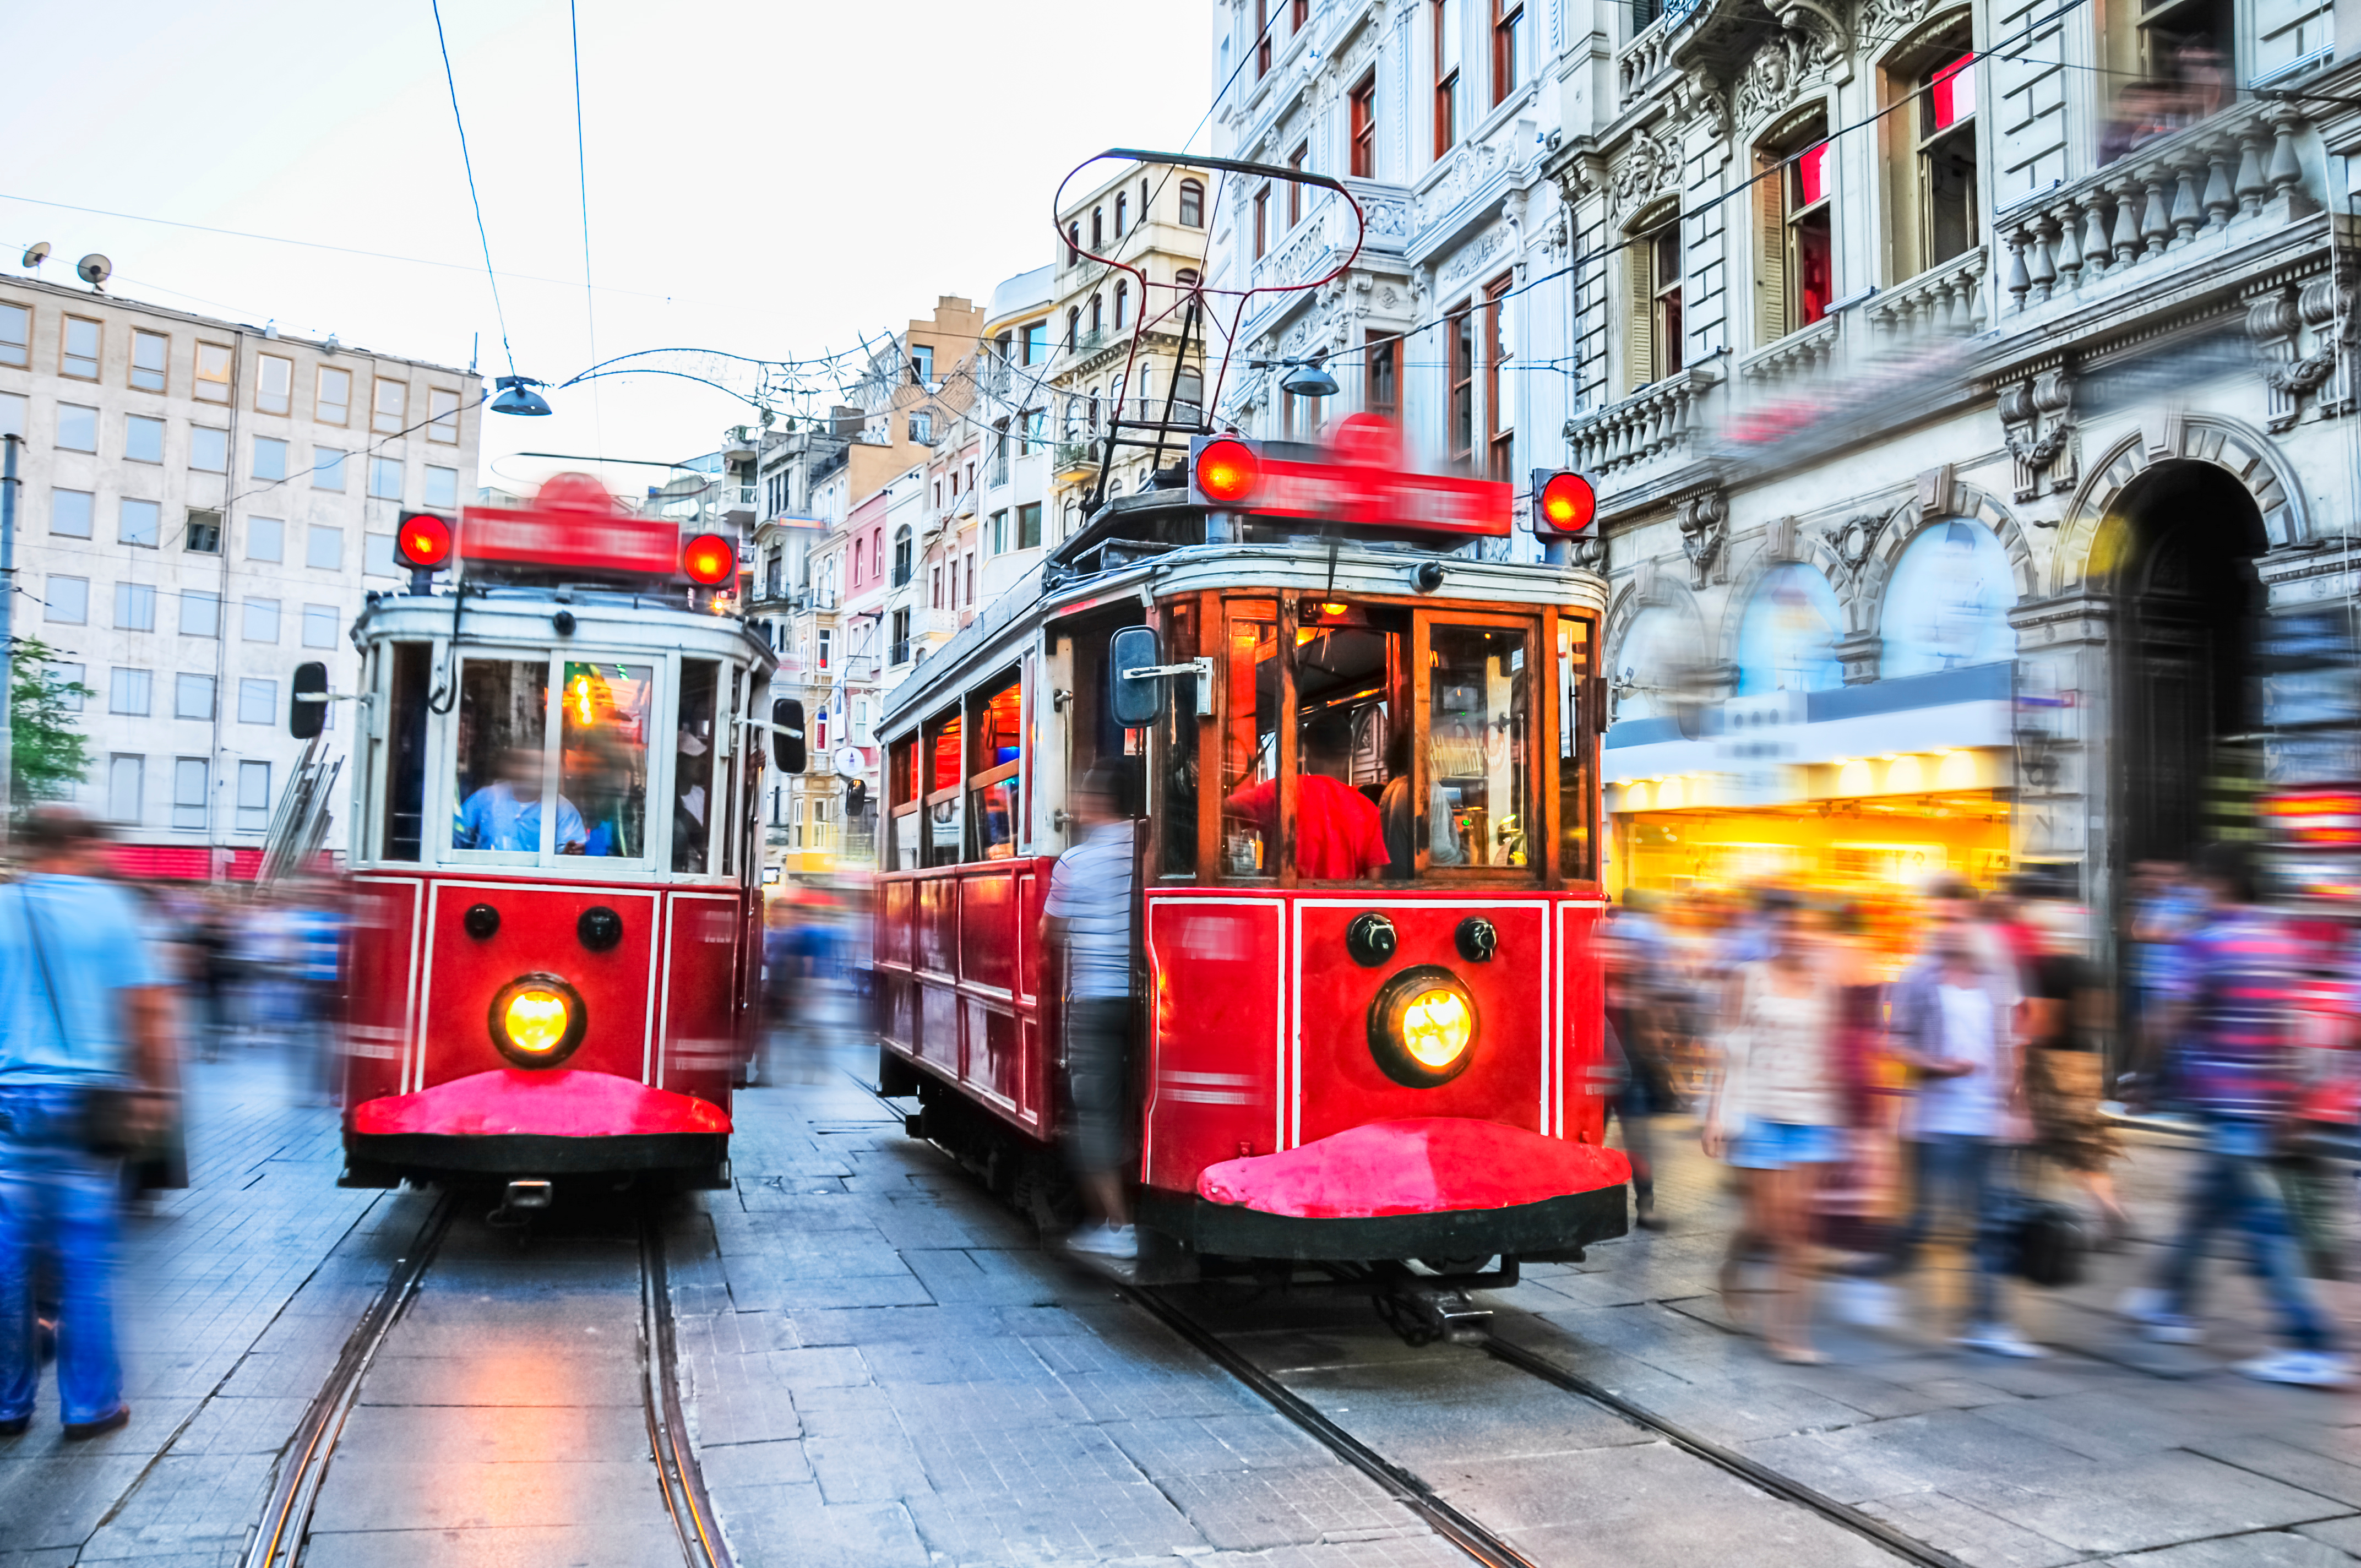 Истикляль. Улица Истикляль в Стамбуле. Трамвай на Истикляль в Стамбуле. Таксим Истикляль. Истикляль Бейоглу.